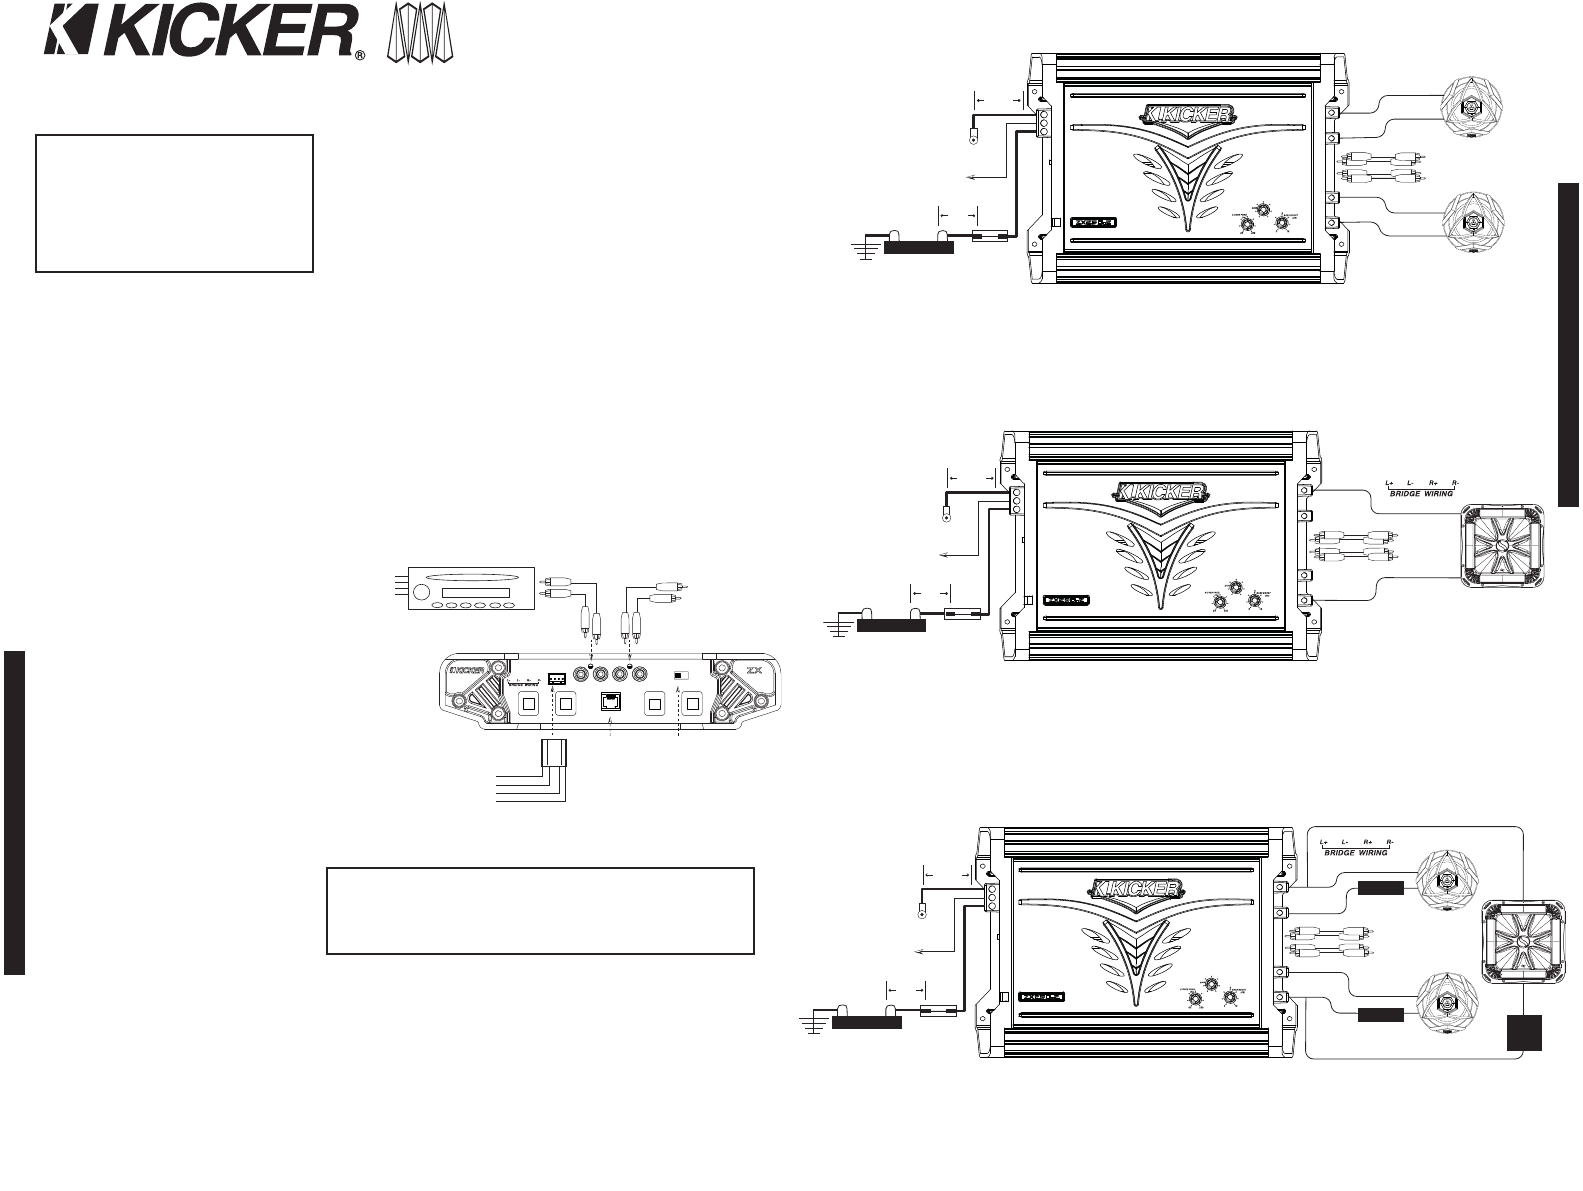 kicker cvr 12 wiring diagram download and allove me